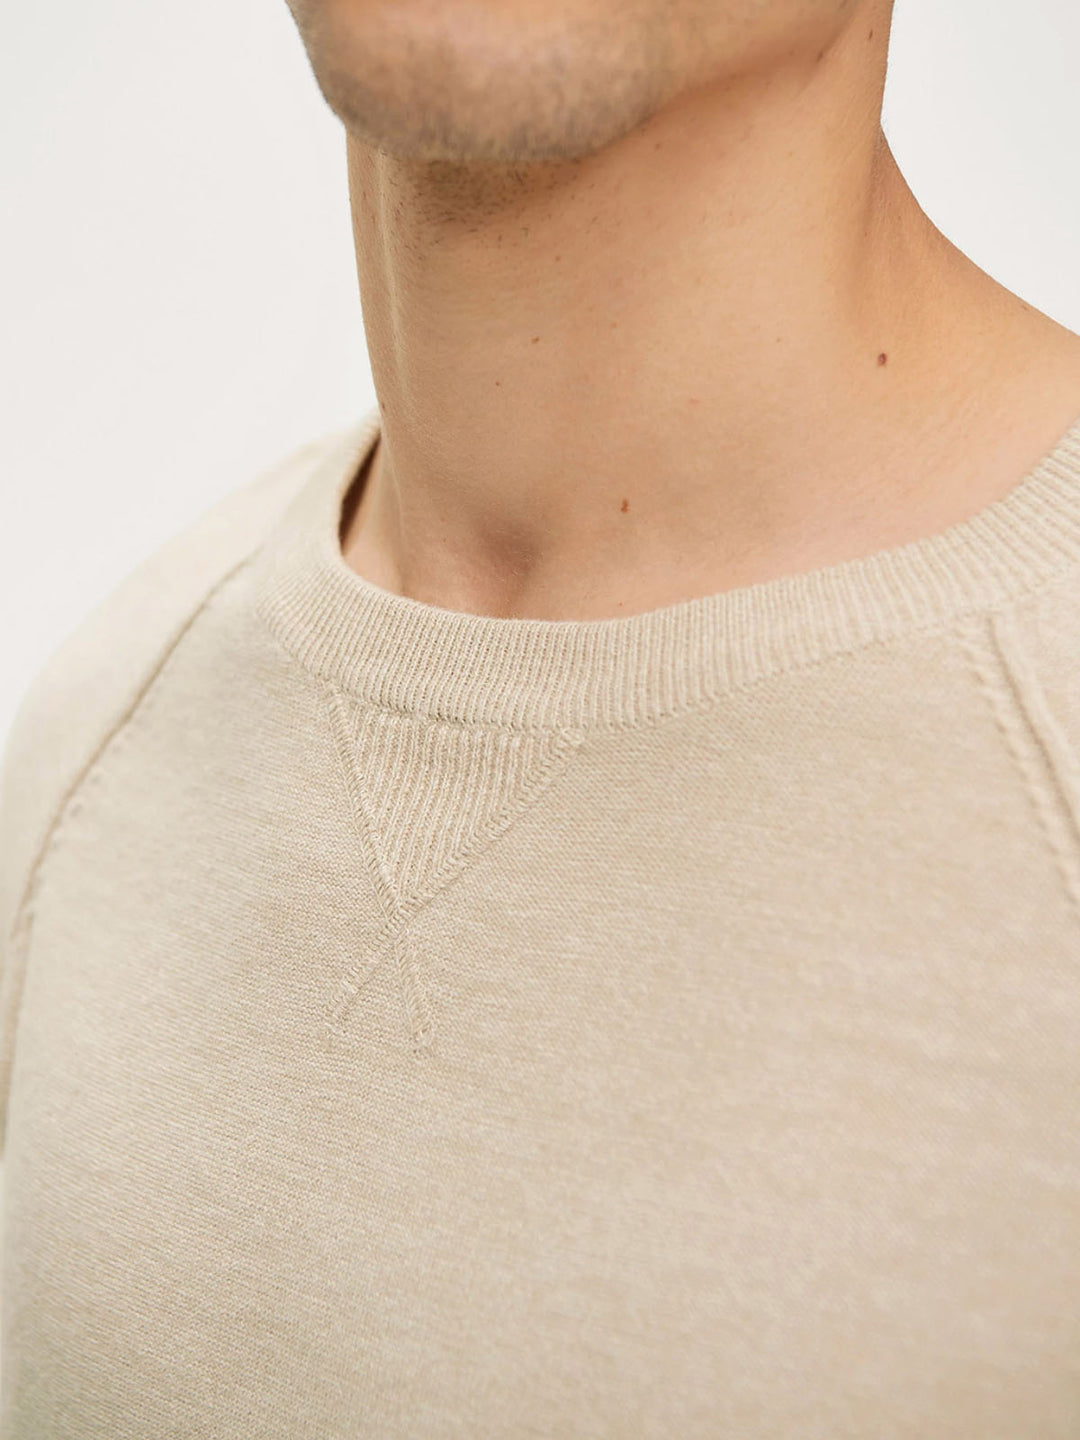 Men's Cream Cotton Fringed Sweater - Free Worldwide Shipping- Sew Royal US